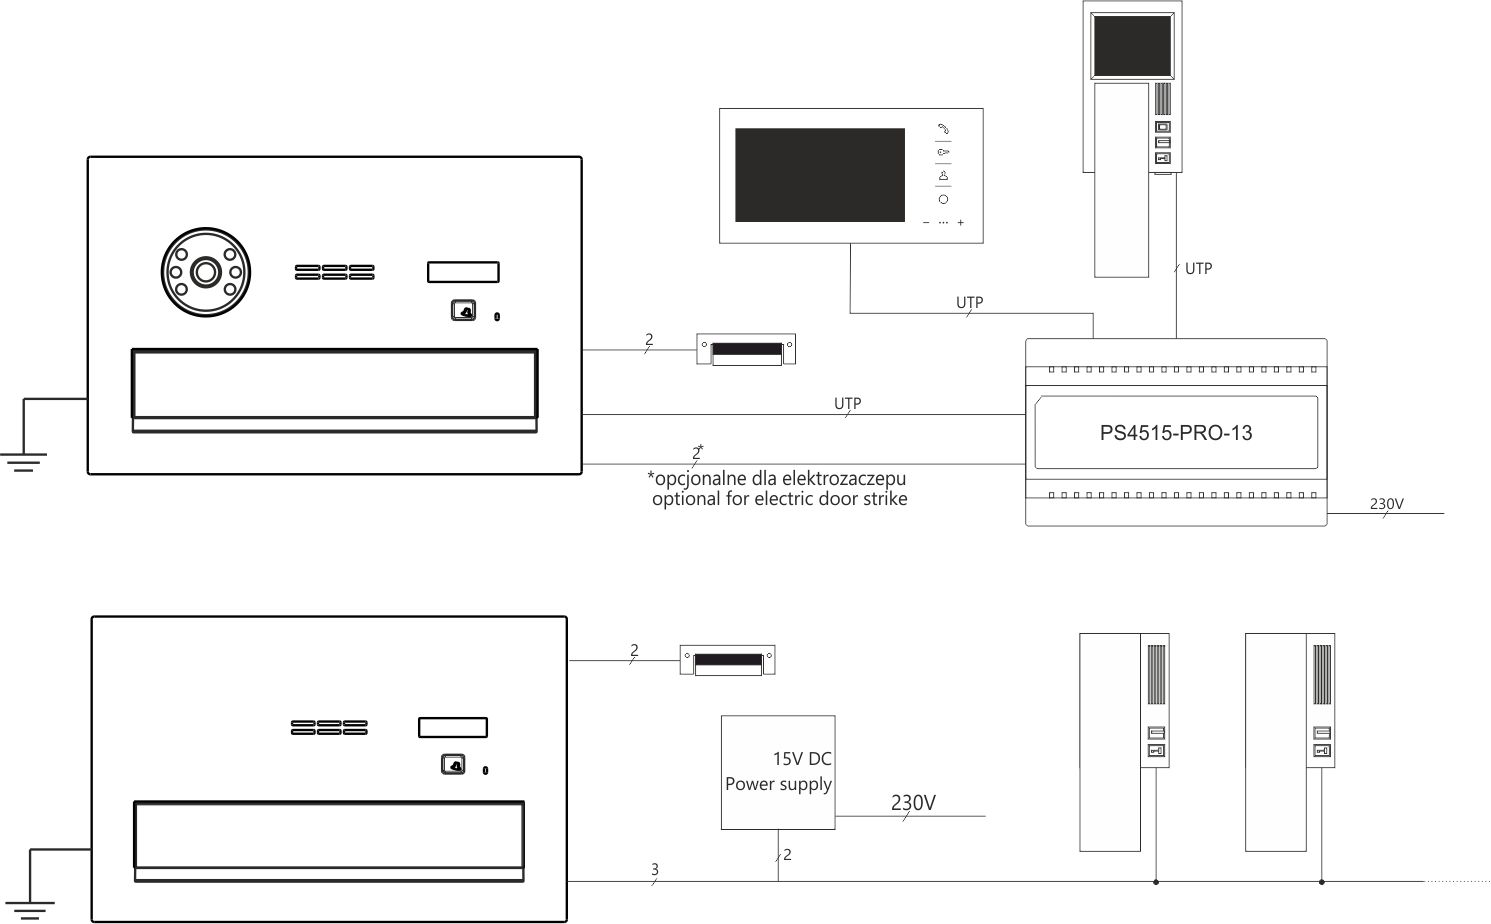 COMO-PRO-POST-V1 Mailbox mit integrierter digitaler Video-Sprechanlage COMO-PRO, Direktruftaste und berührungslosem Schlüsselanhänger-Lesegerät - Diagramm